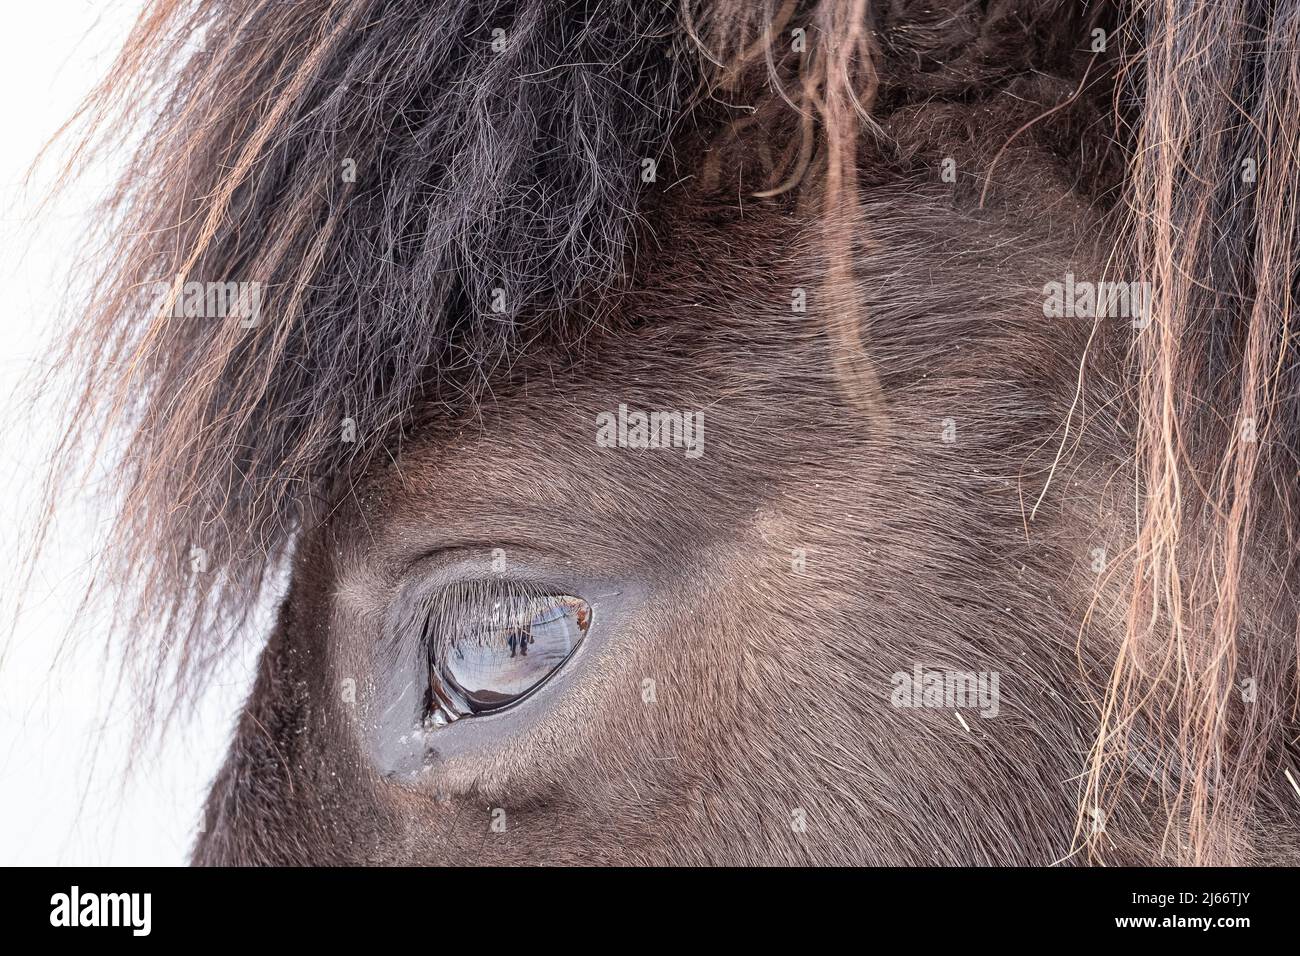 Islandpferd, Nahaufnahme Auge - icelandci cheval, gros plan Banque D'Images